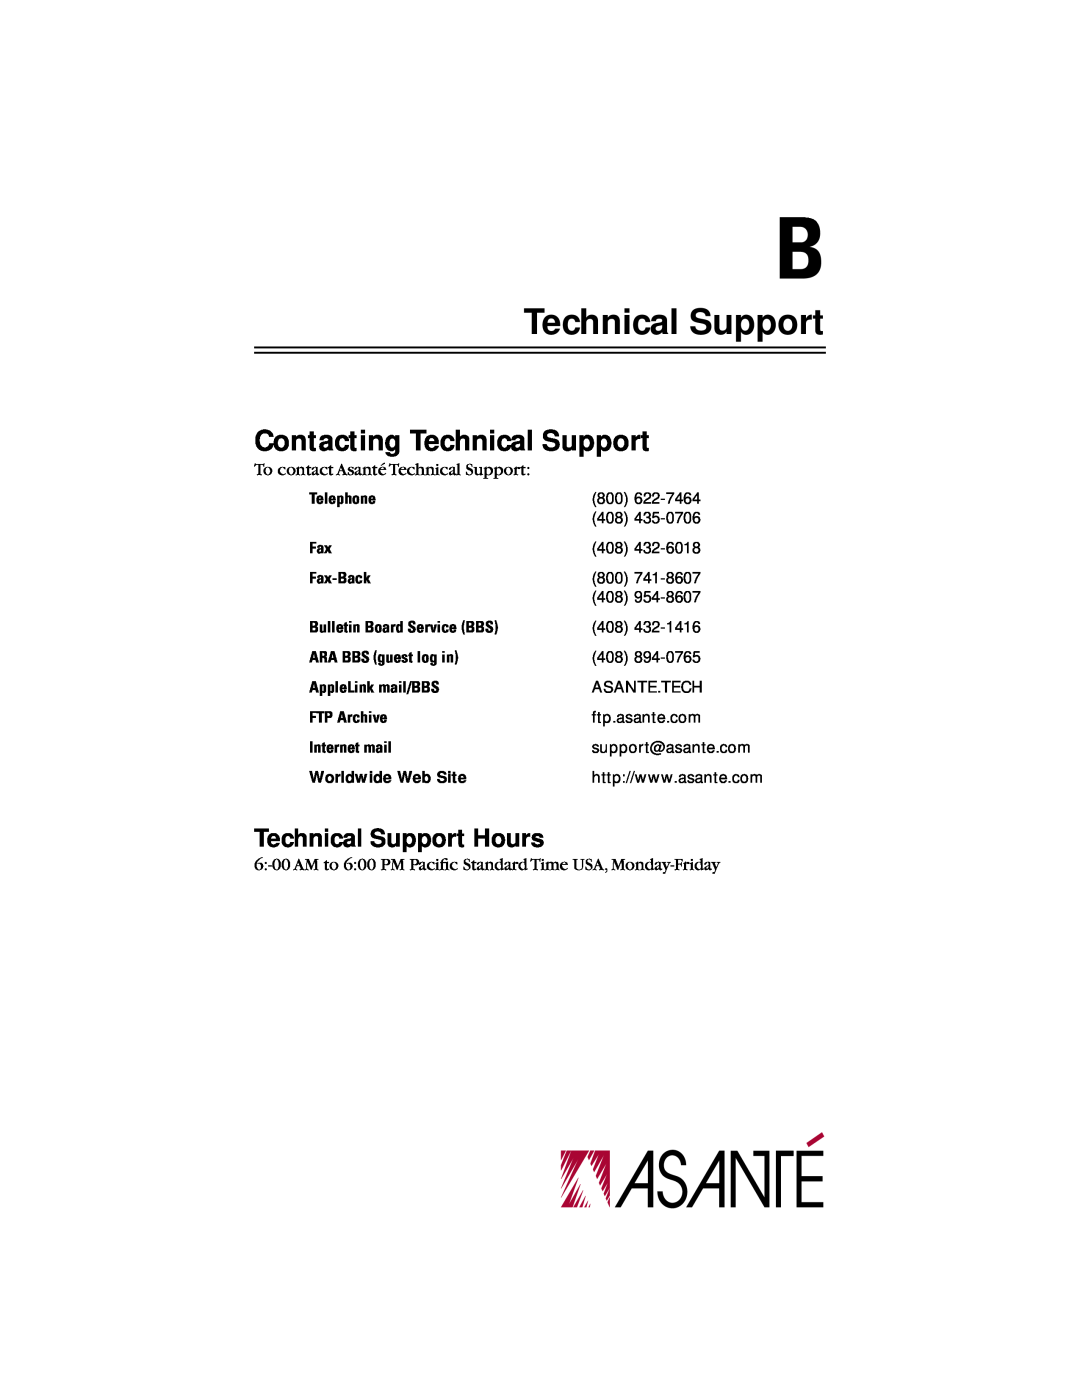 Asante Technologies 10NIC-PCITM manual Contacting Technical Support, Technical Support Hours, Telephone, Fax-Back 